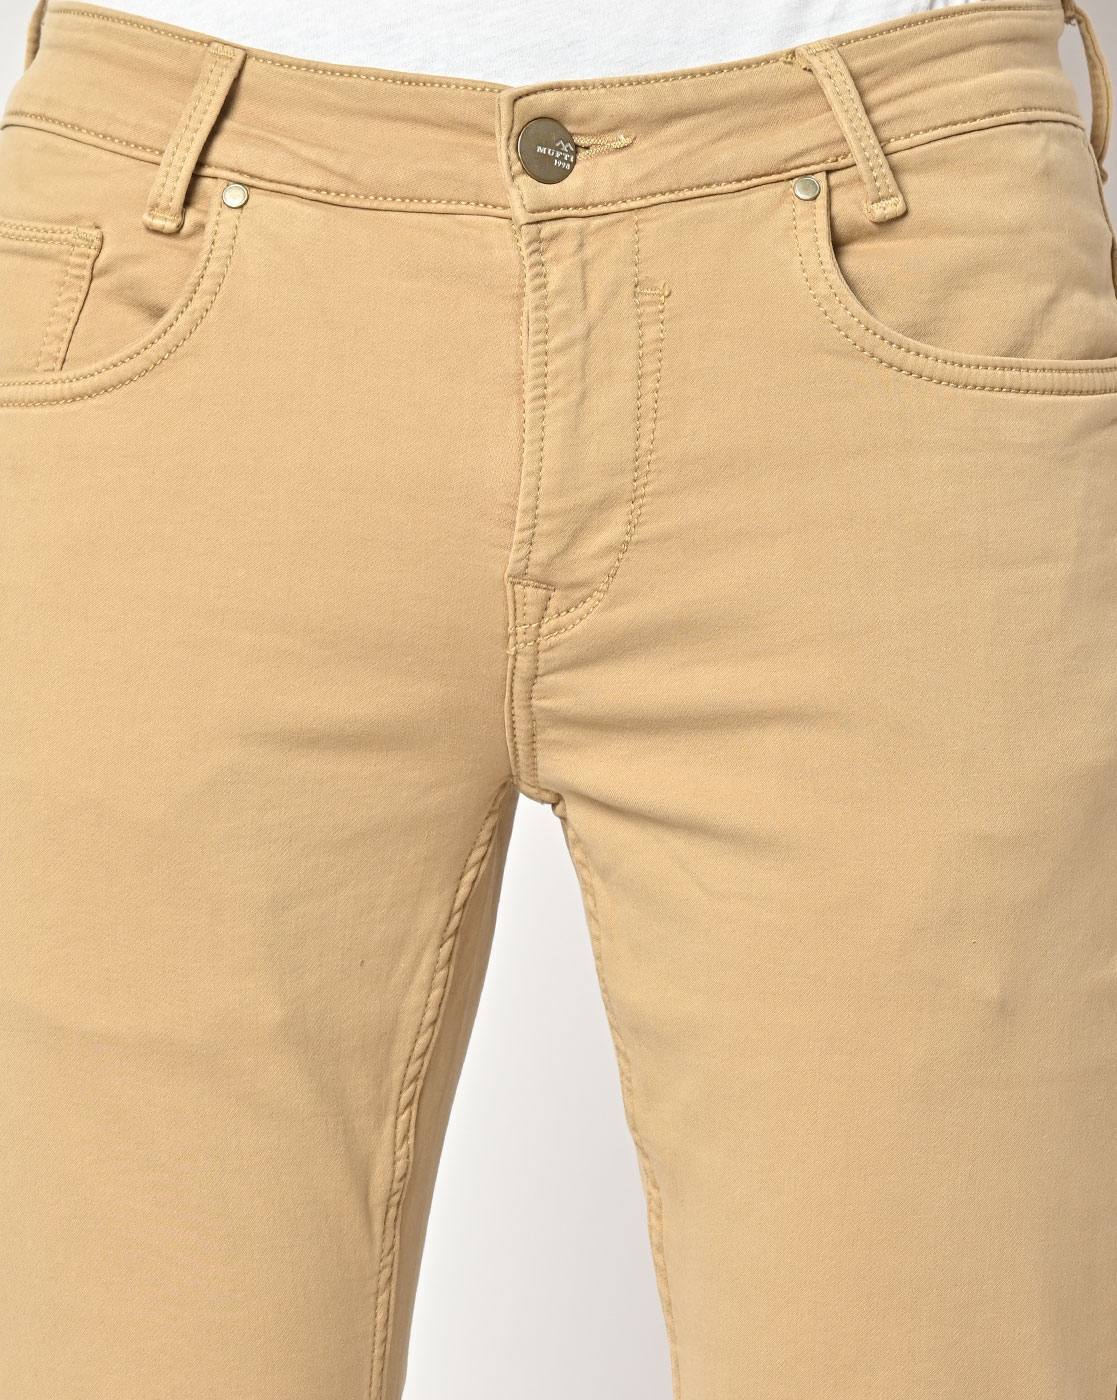 Decibel Jeans Mens Size 40x32 Cargo Khaki Denim Distressed Pants White Wash  - Helia Beer Co